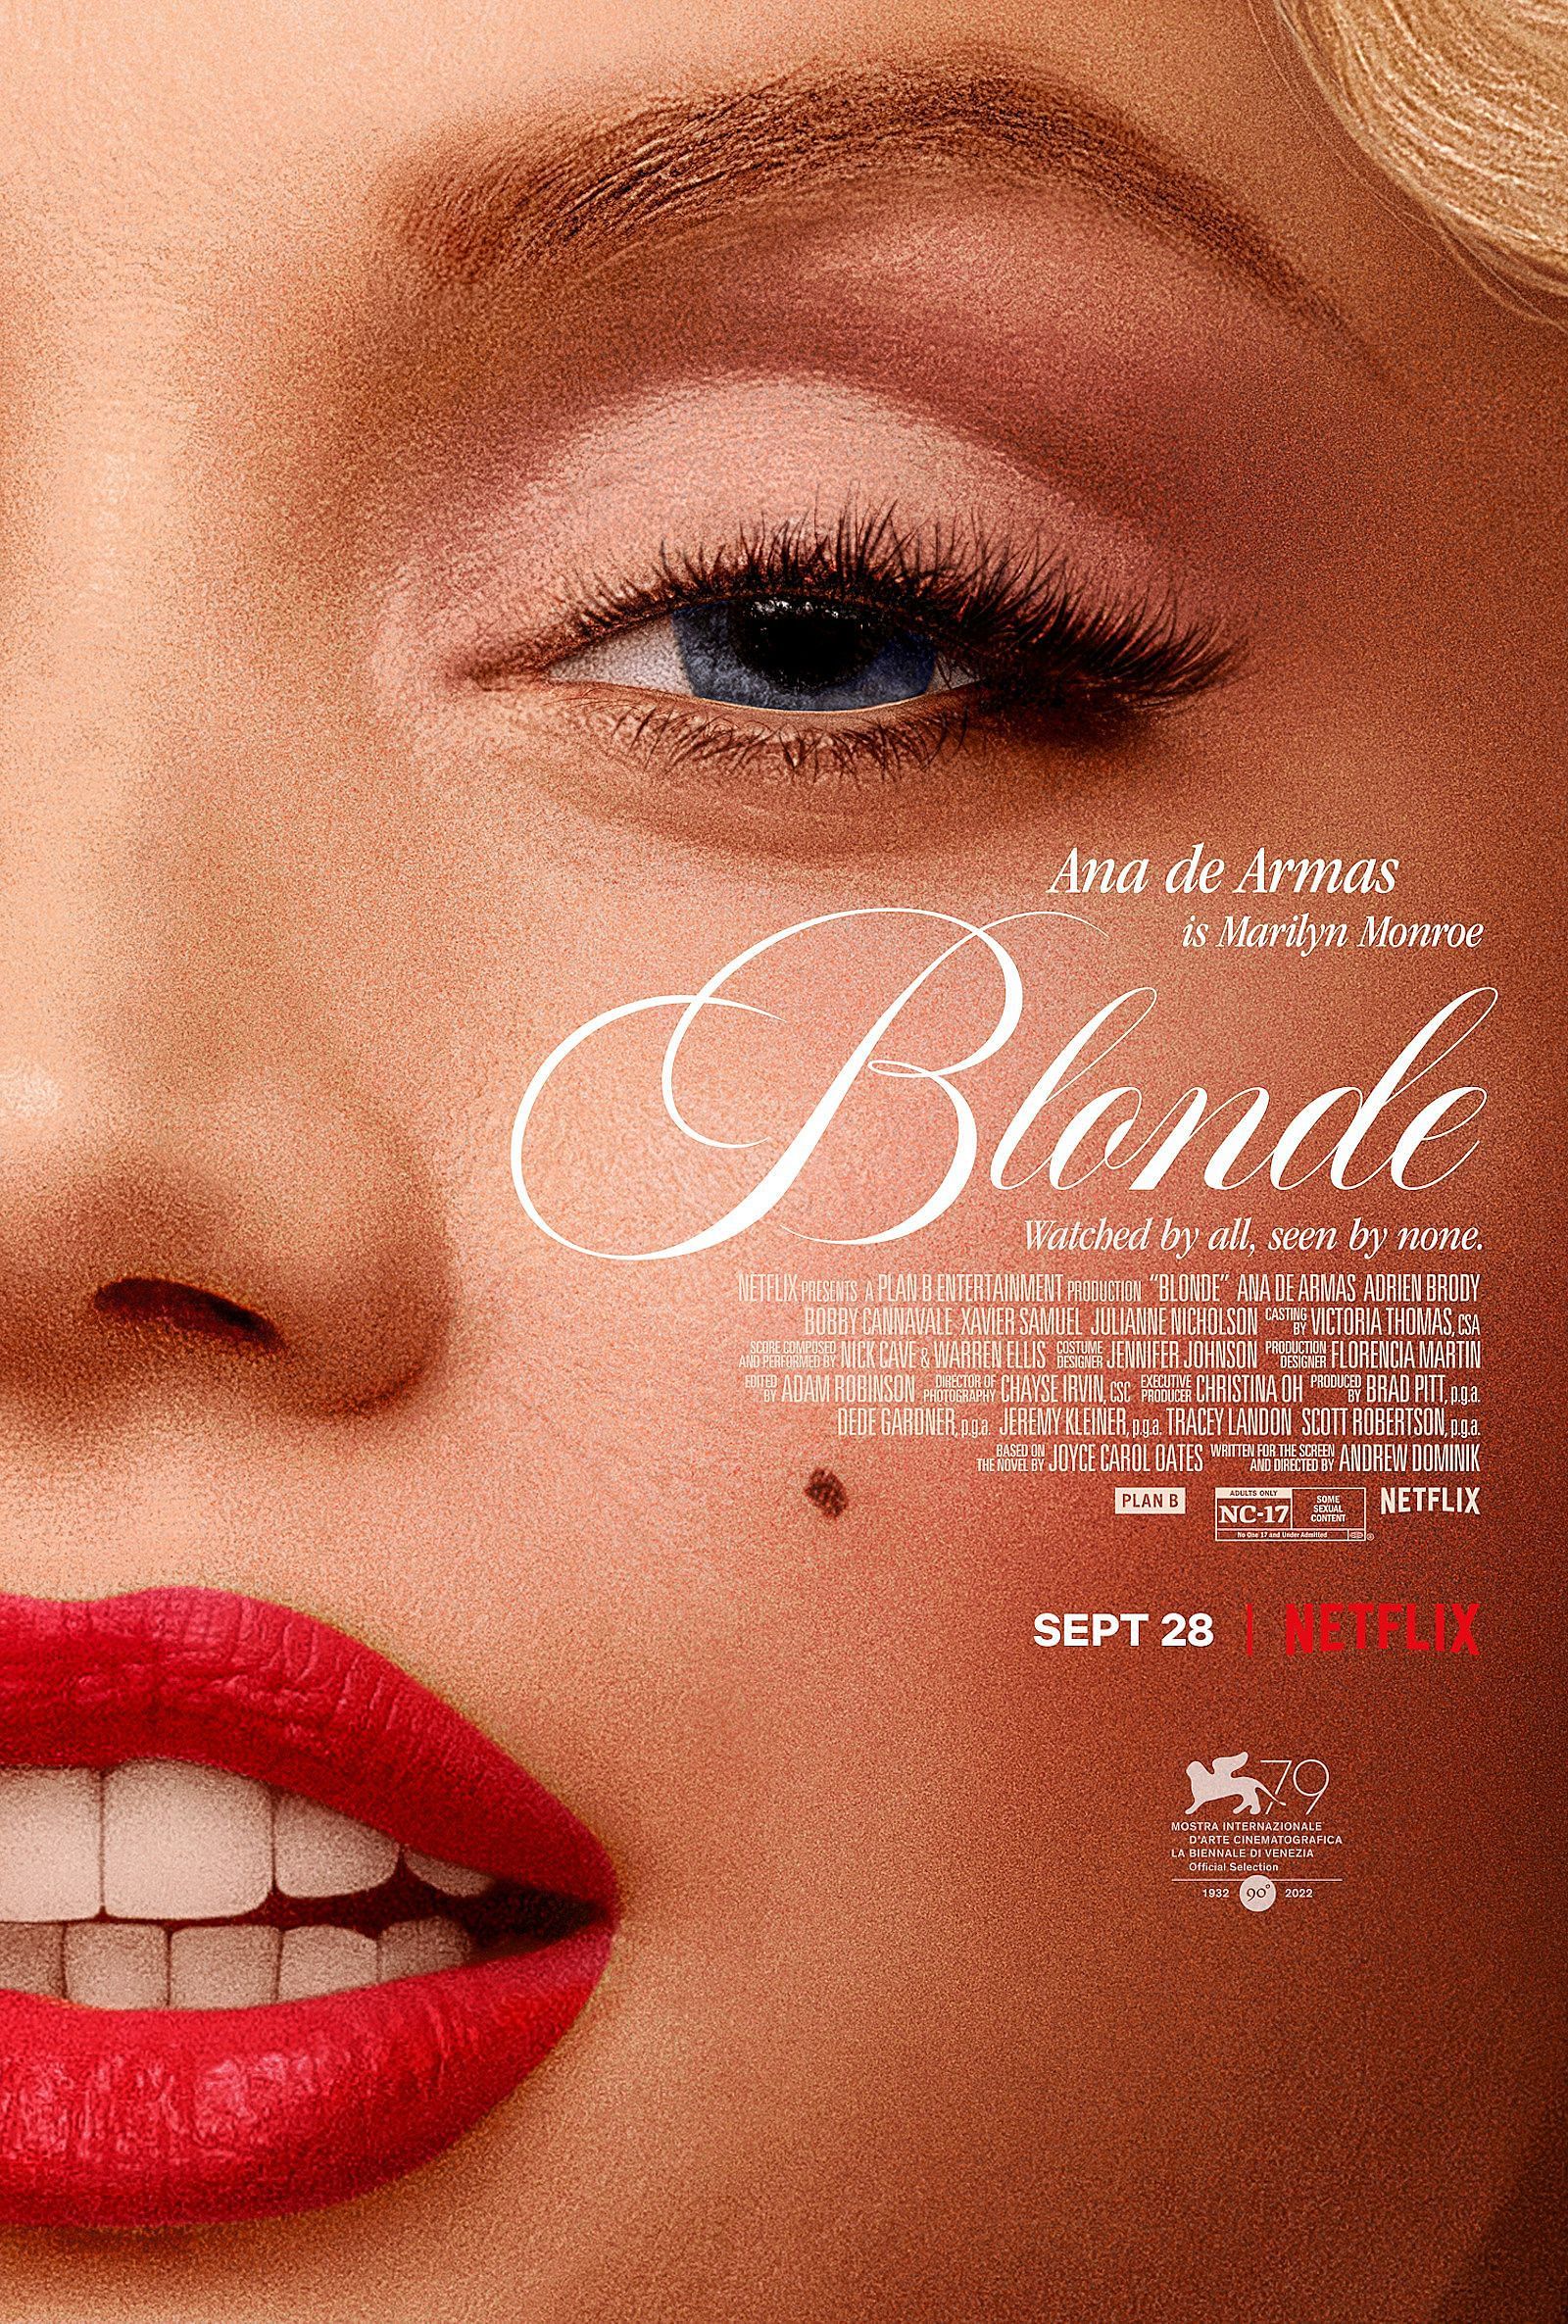 Blonde (Image via Netflix)